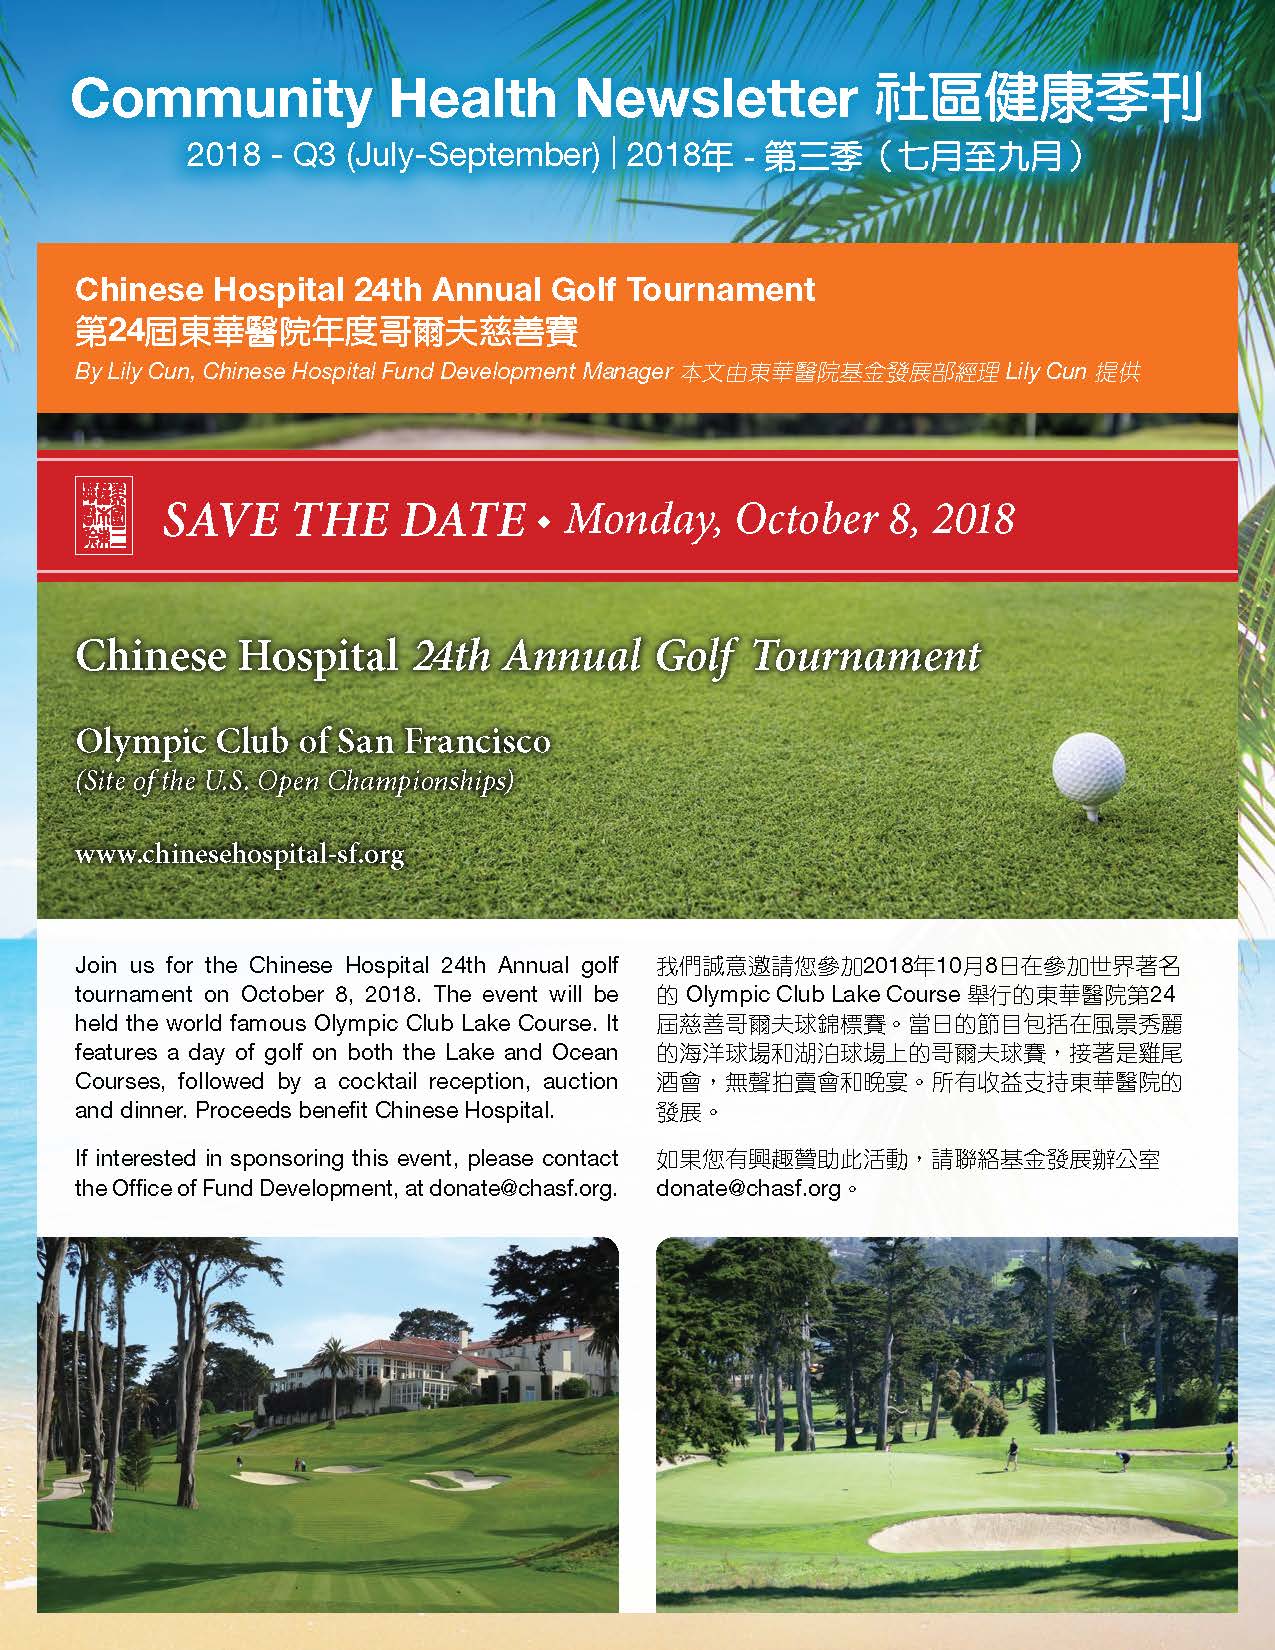 CCHP 2018 q3 newsletter, information of golf event